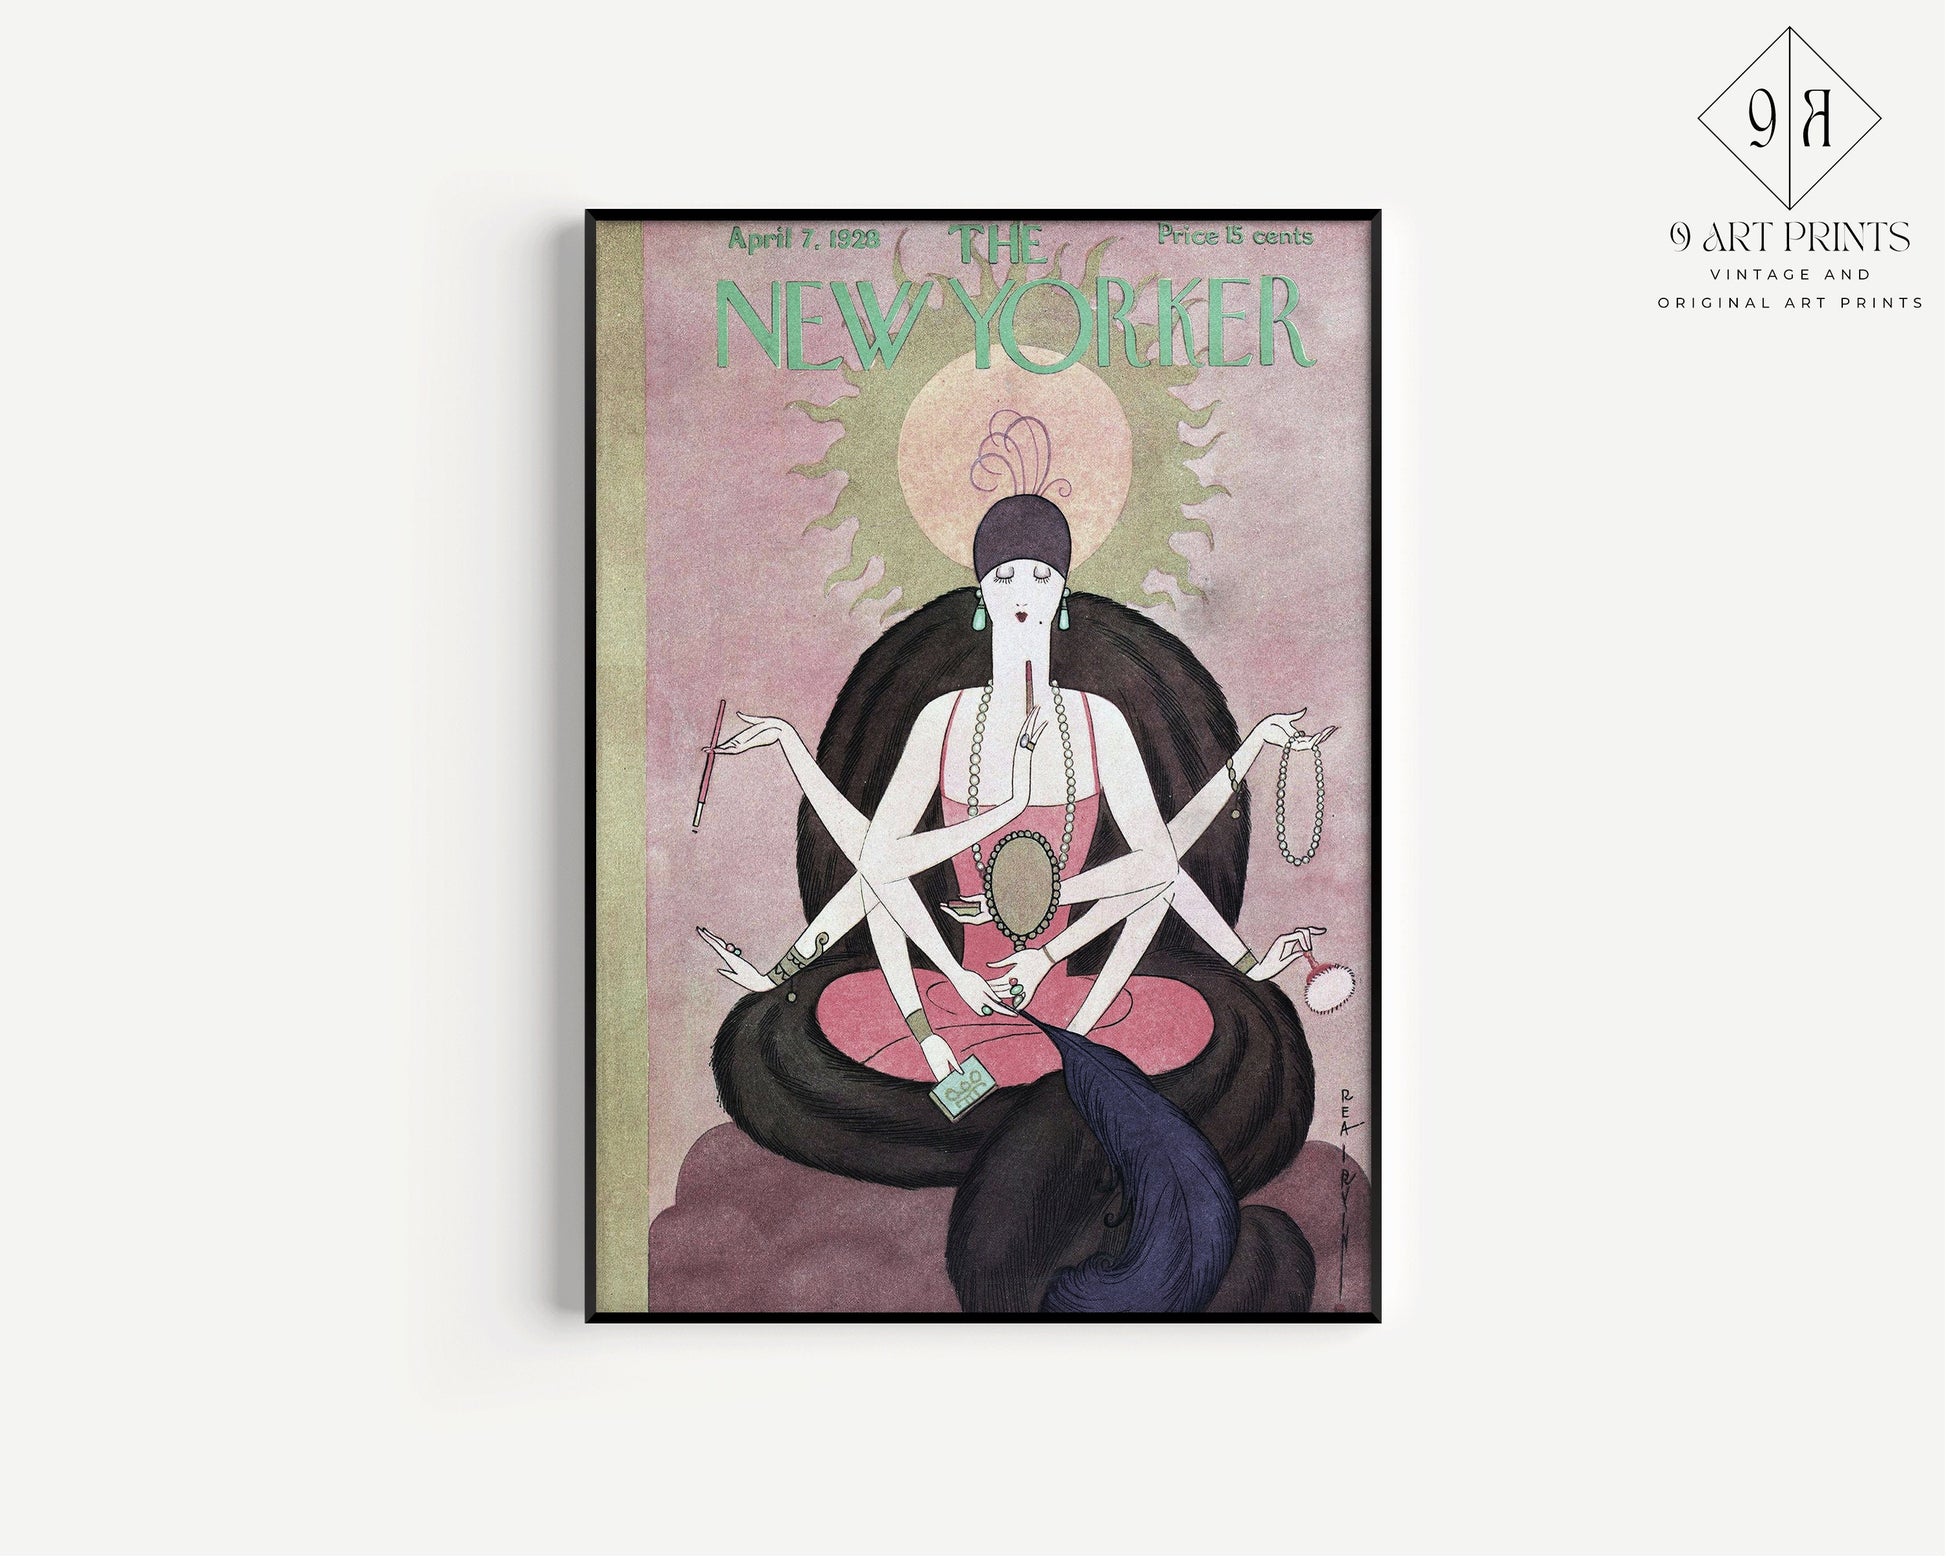 New Yorker Magazine Cover Poster | April 1928 (available framed or unframed)